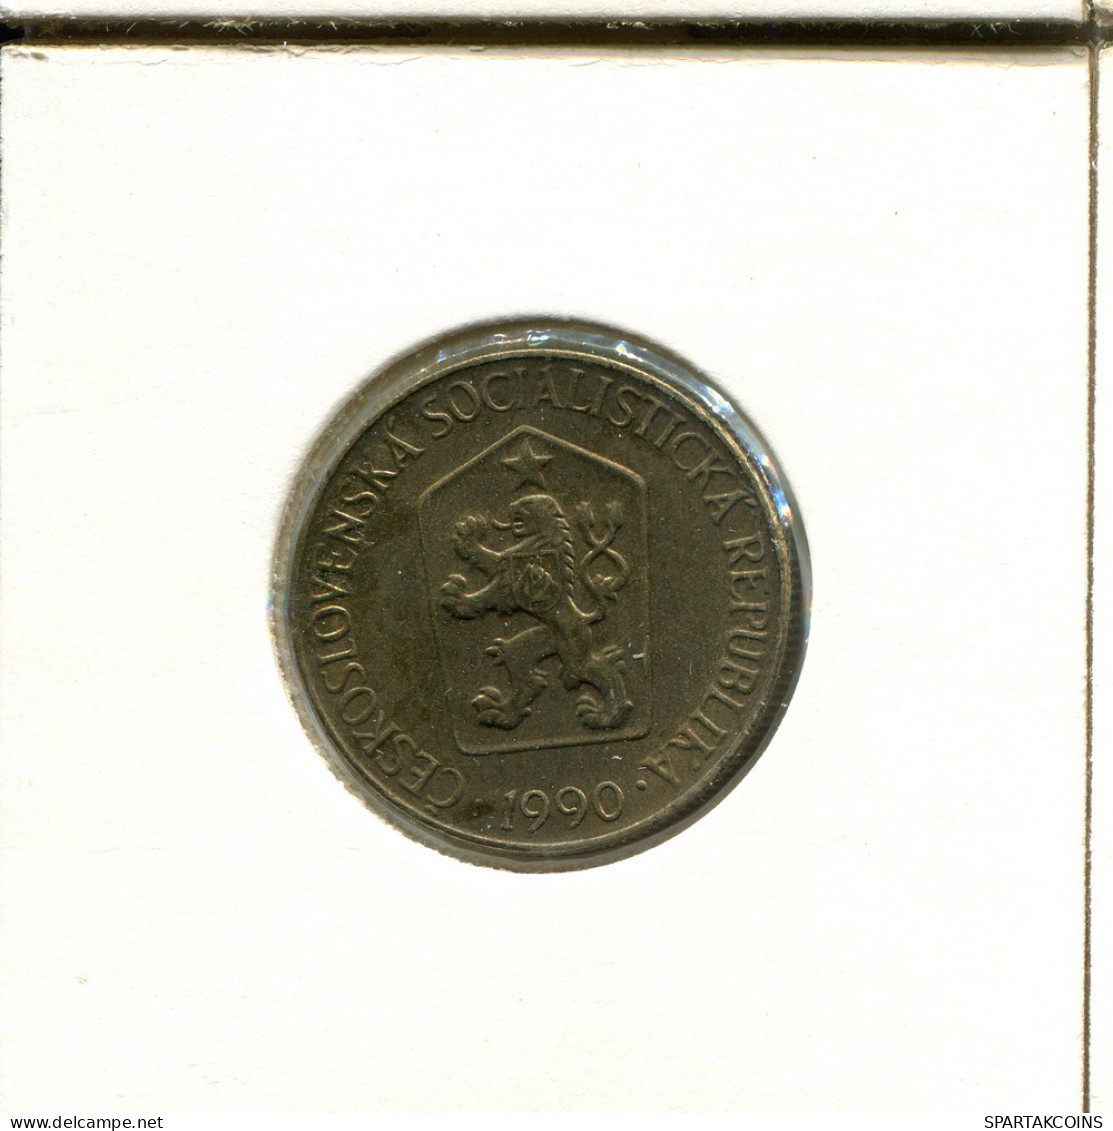 1 KORUNA 1990 CZECHOSLOVAKIA Coin #AS971.U.A - Cecoslovacchia